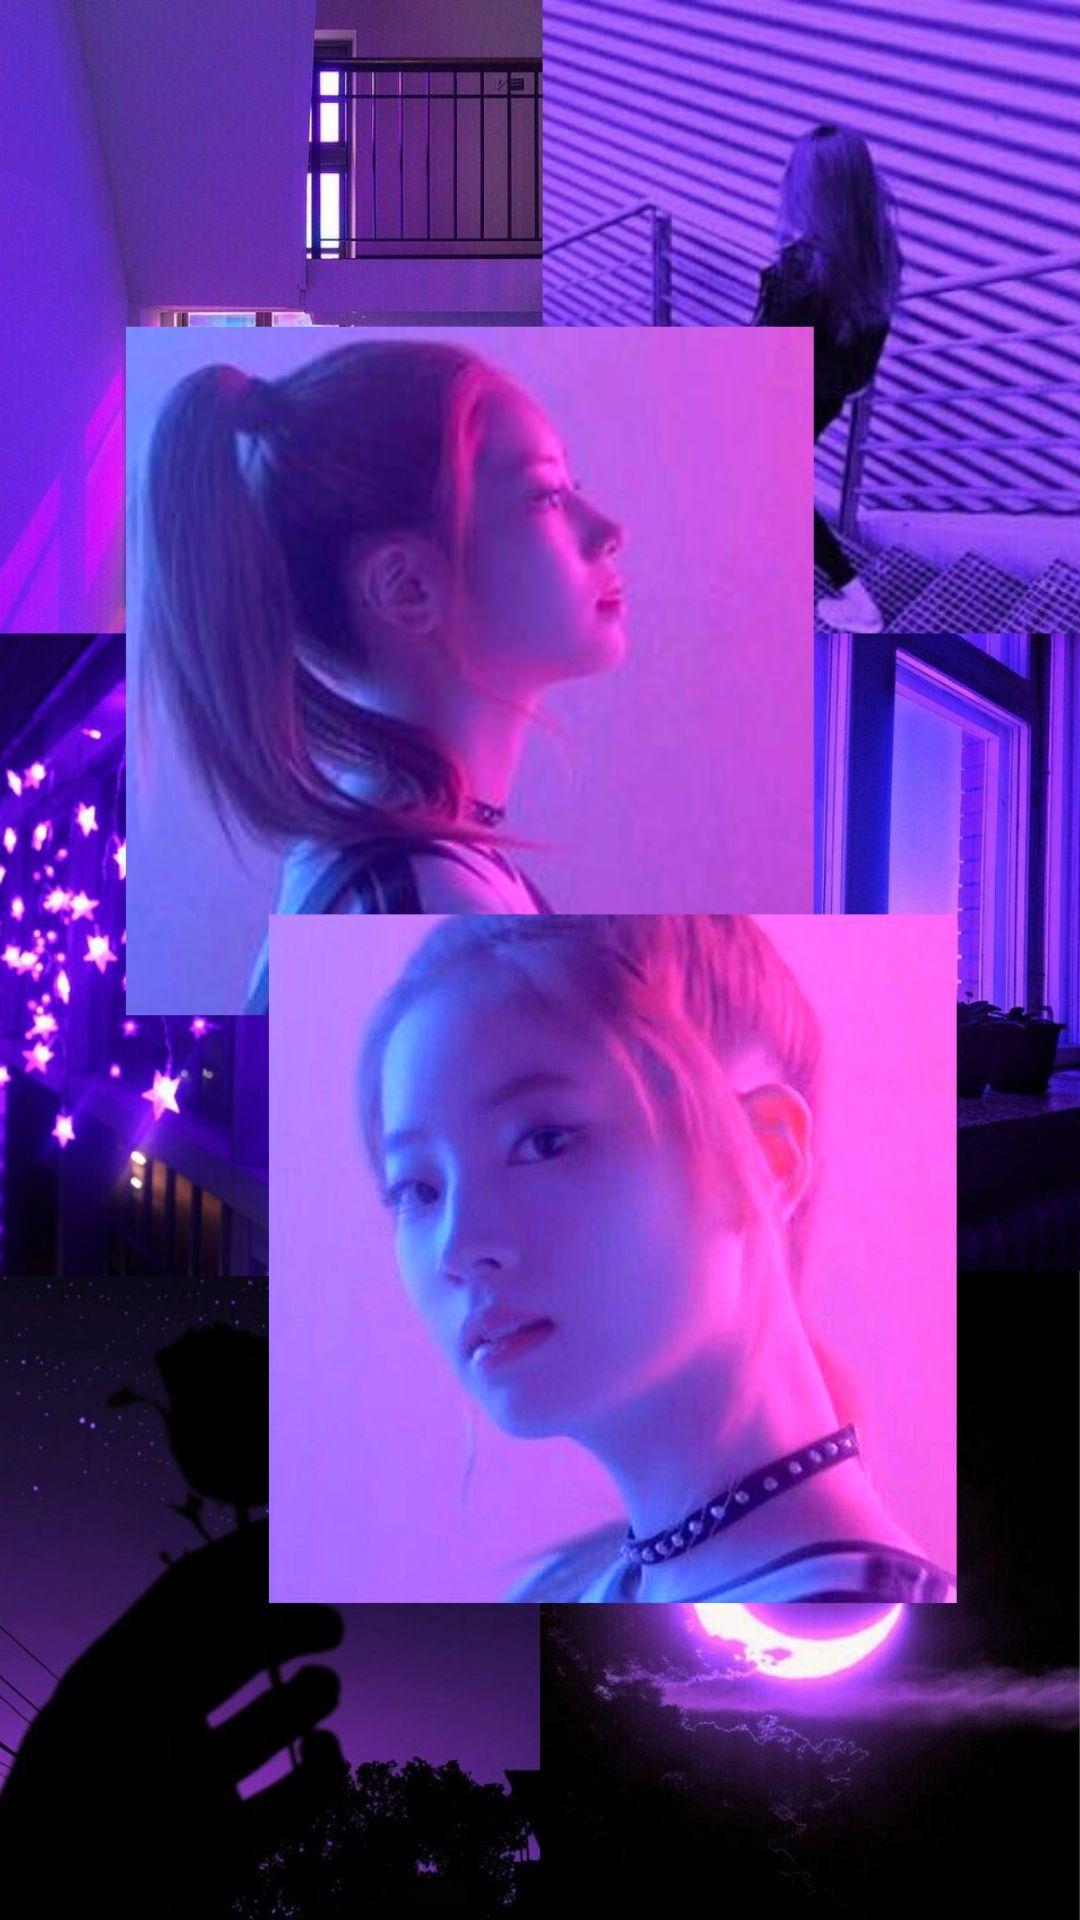 Twice #Dahyun #Aesthetic #Wallpaper. Kpop wallpaper, Purple aesthetic, Aesthetic wallpaper